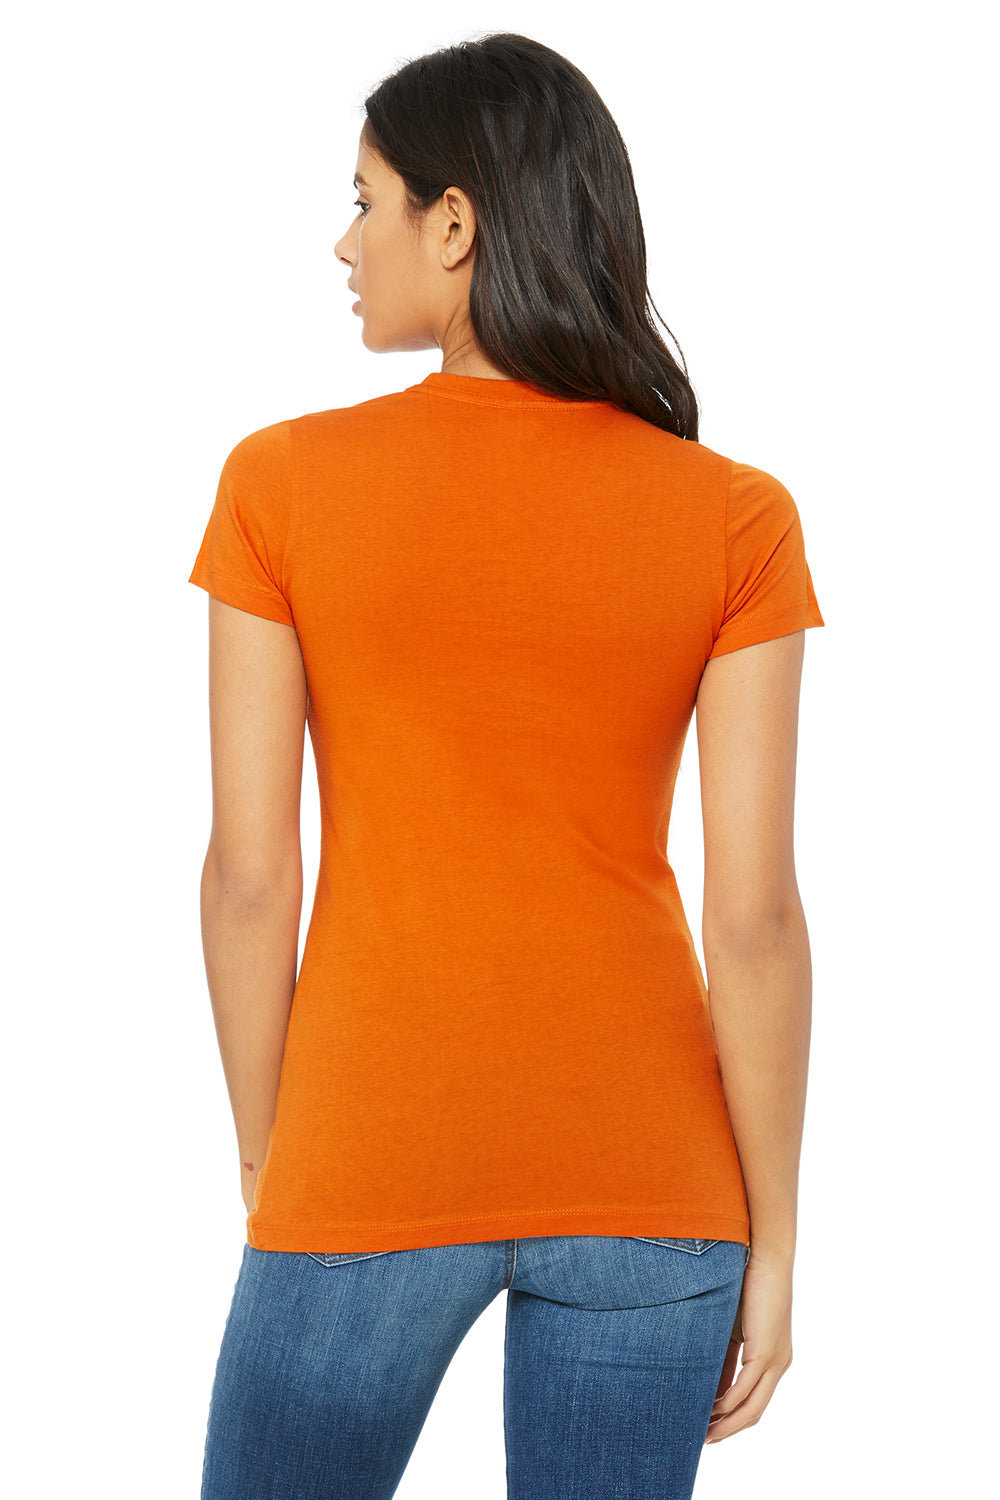 Bella + Canvas BC6004/6004 Womens The Favorite Short Sleeve Crewneck T-Shirt Orange Model Back